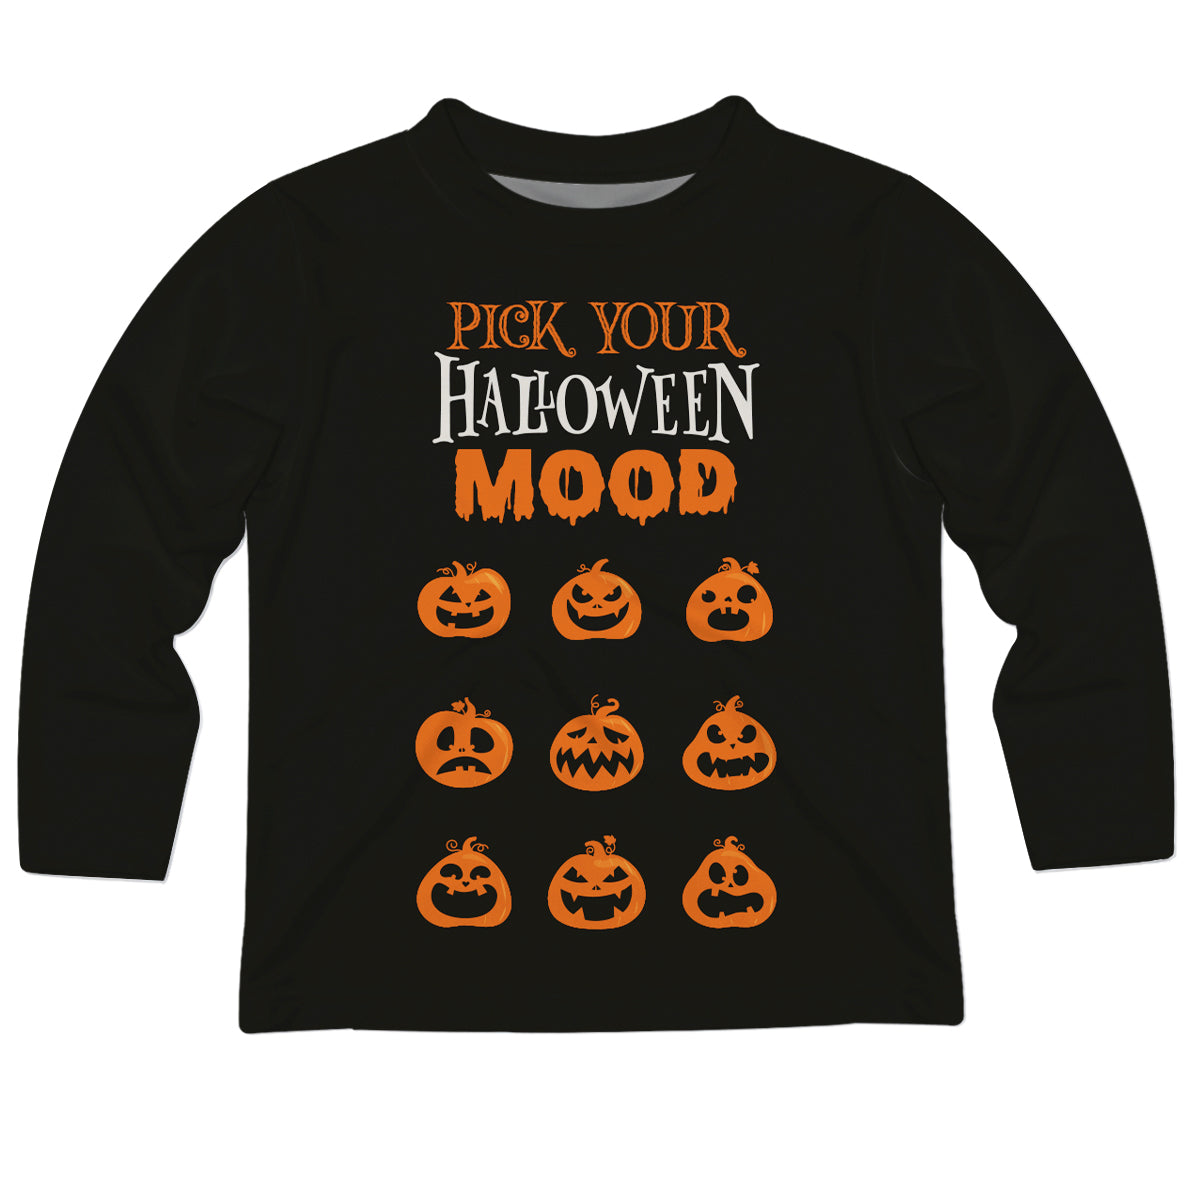 Pick Your Halloween Mood Black Long Sleeve Tee Shirt